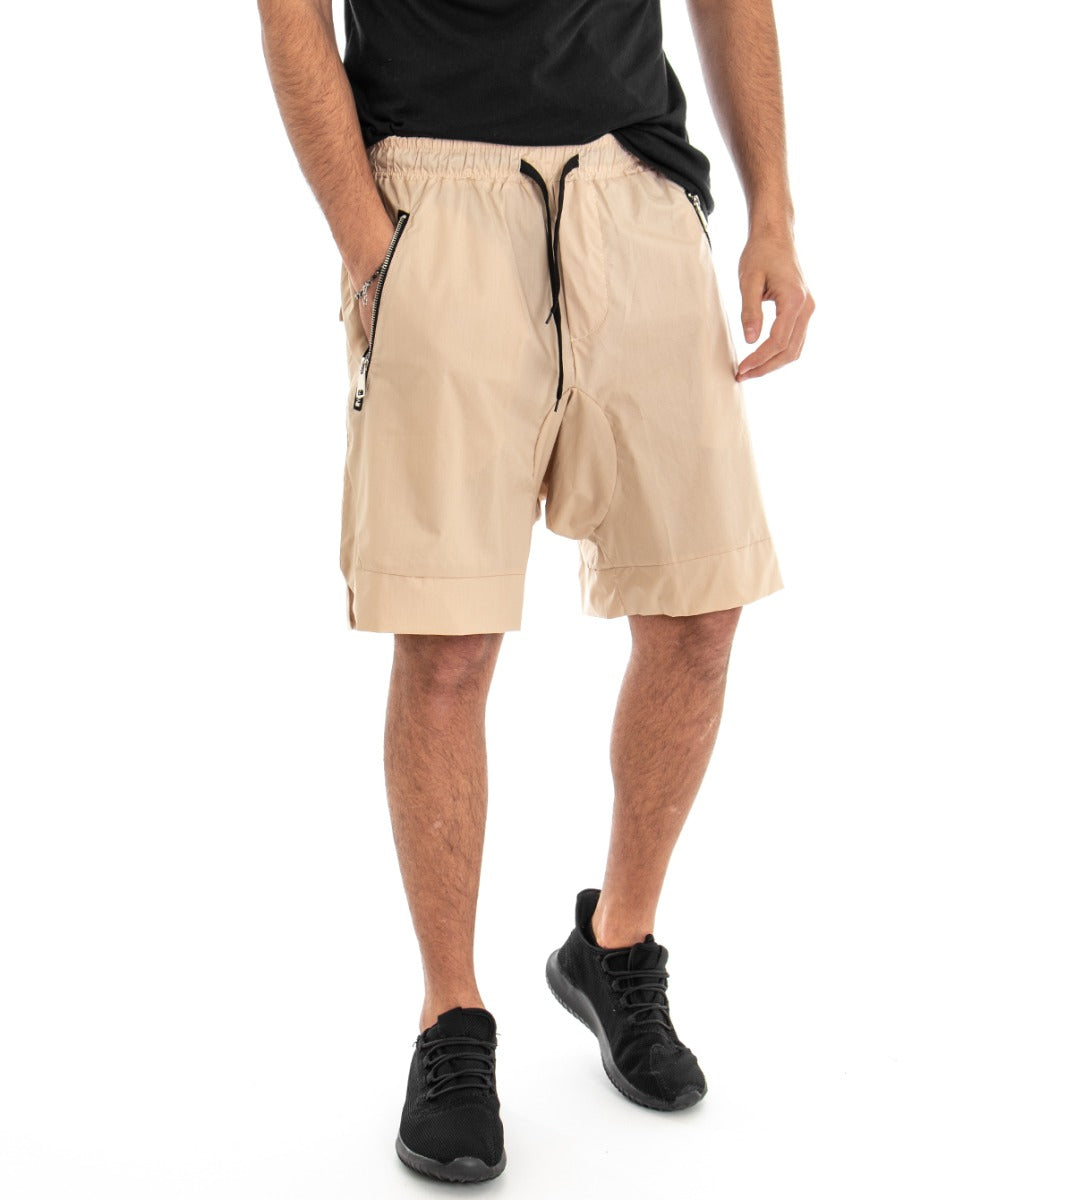 Bermuda Men's Shorts Beige Elastic Low Crotch GIOSAL-PC1360A